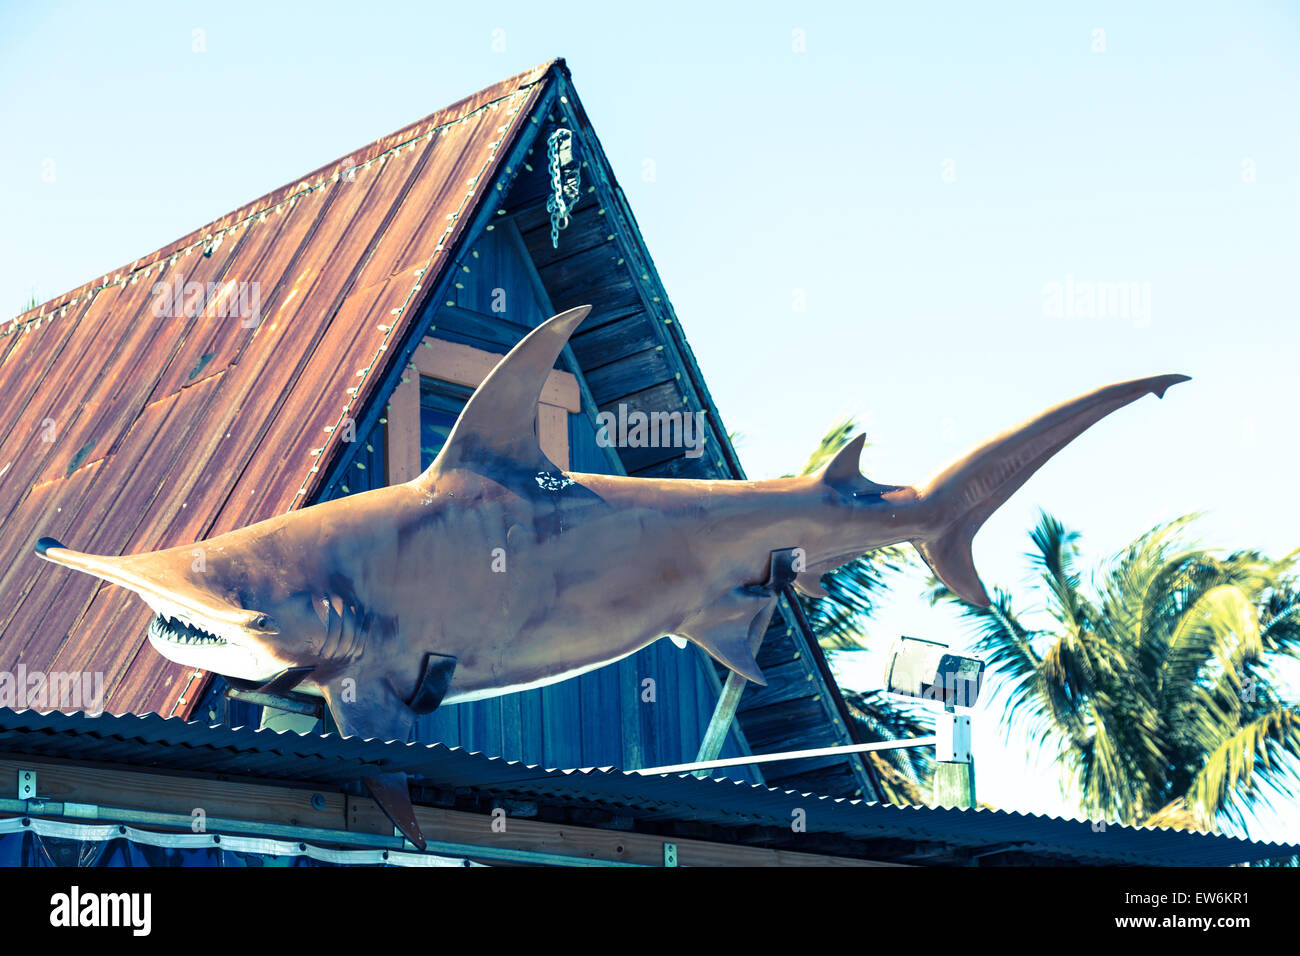 Tamaño de la vida de Cabeza de tiburón estatua, John's Pass, Madeira Beach, FL, EE.UU. Foto de stock